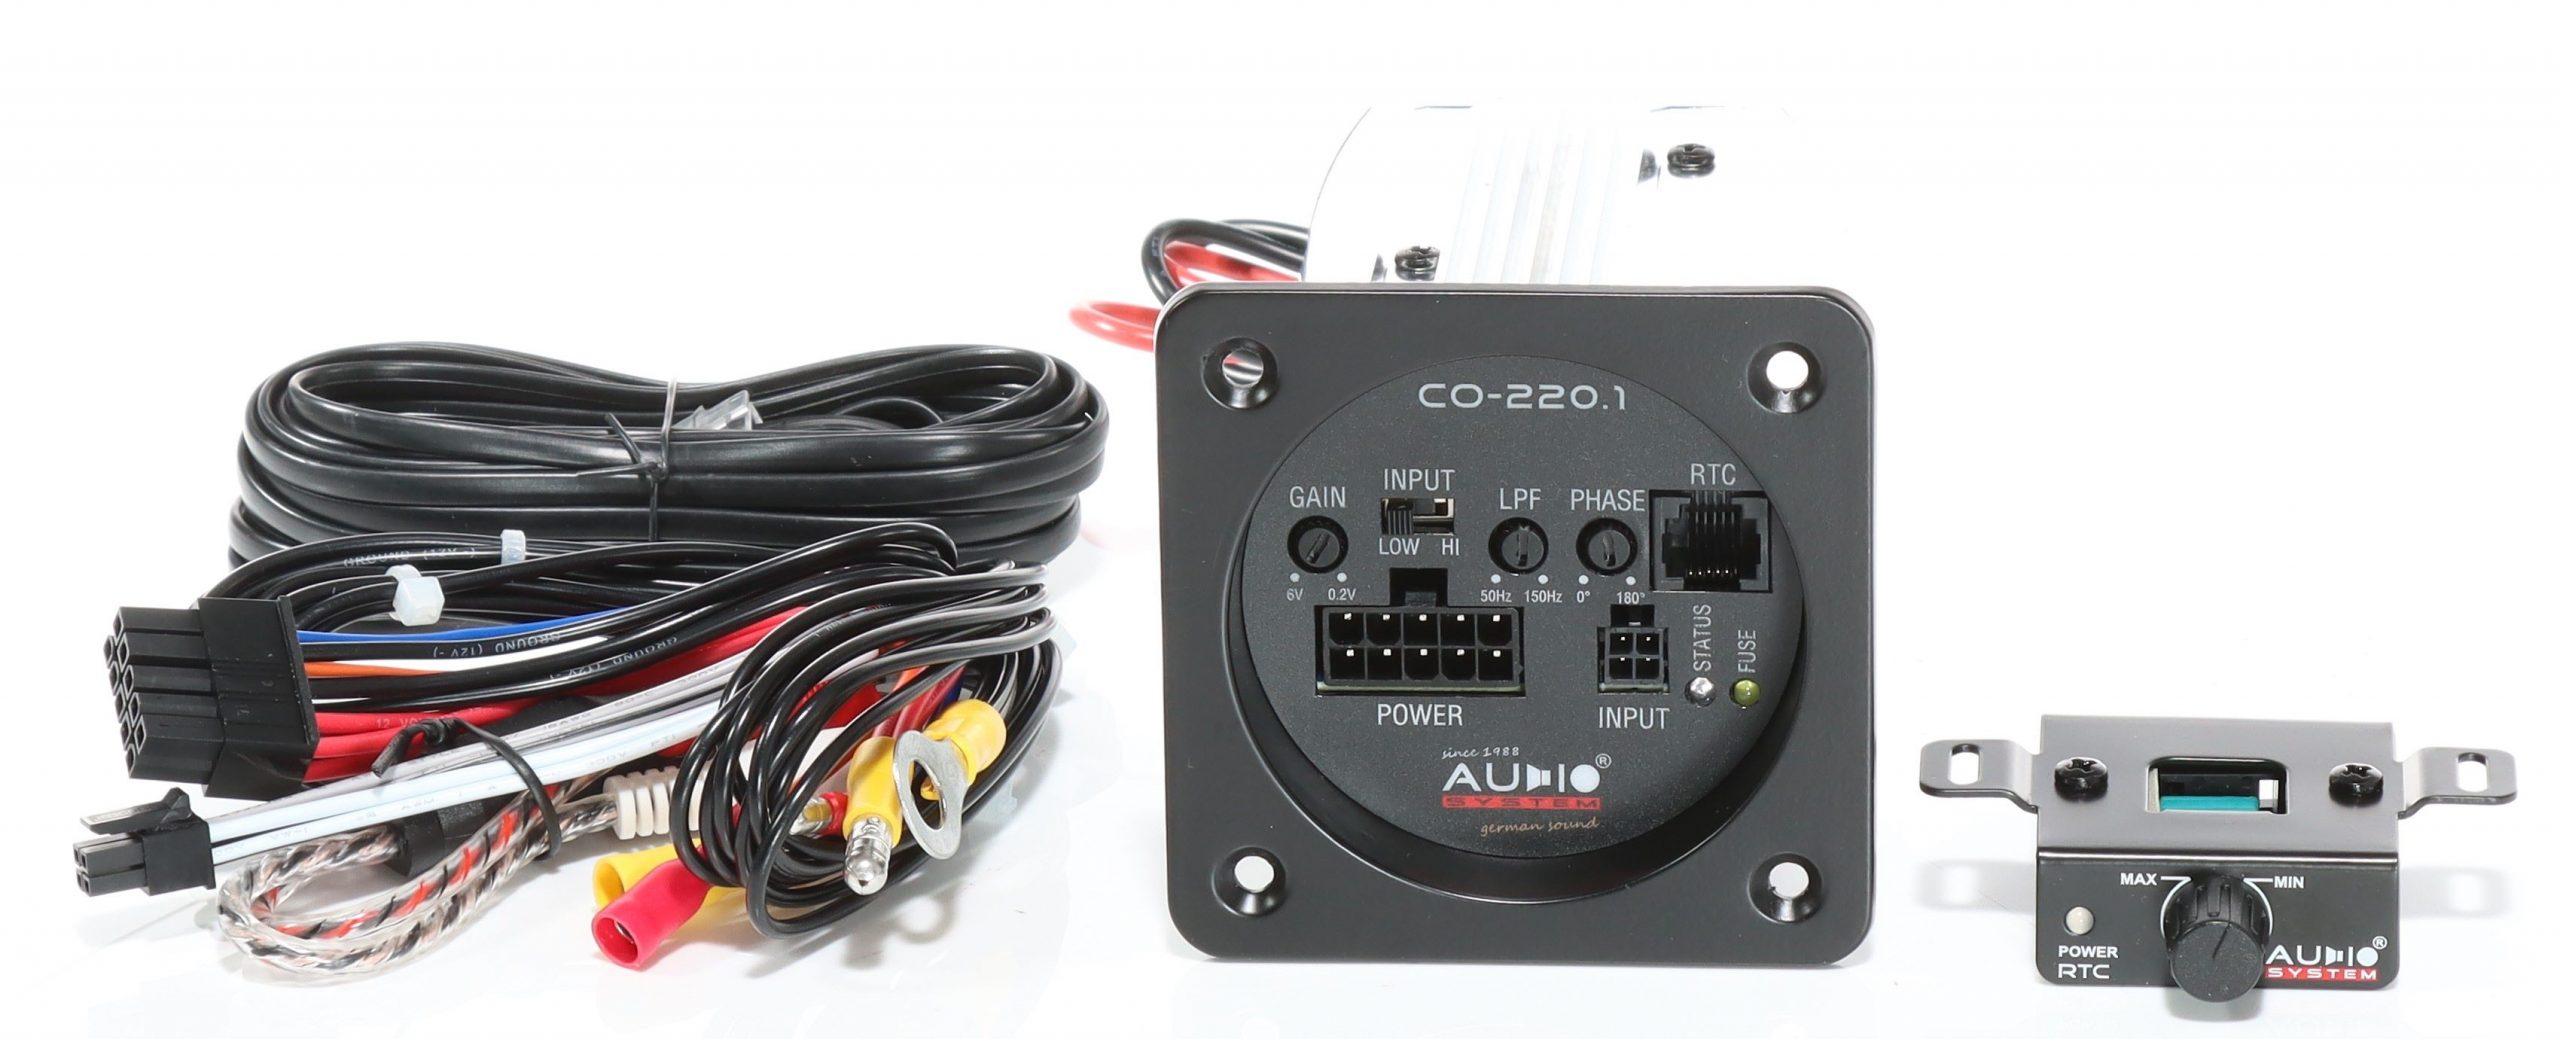 Audio System SUBFRAME M10-D4 ACTIVE 220 EVO2 Reserverad aktiv Subwoofer 350 Watt Bassgehäuse mit M10 EVO2-D4 + Verstärker CO-220.1   